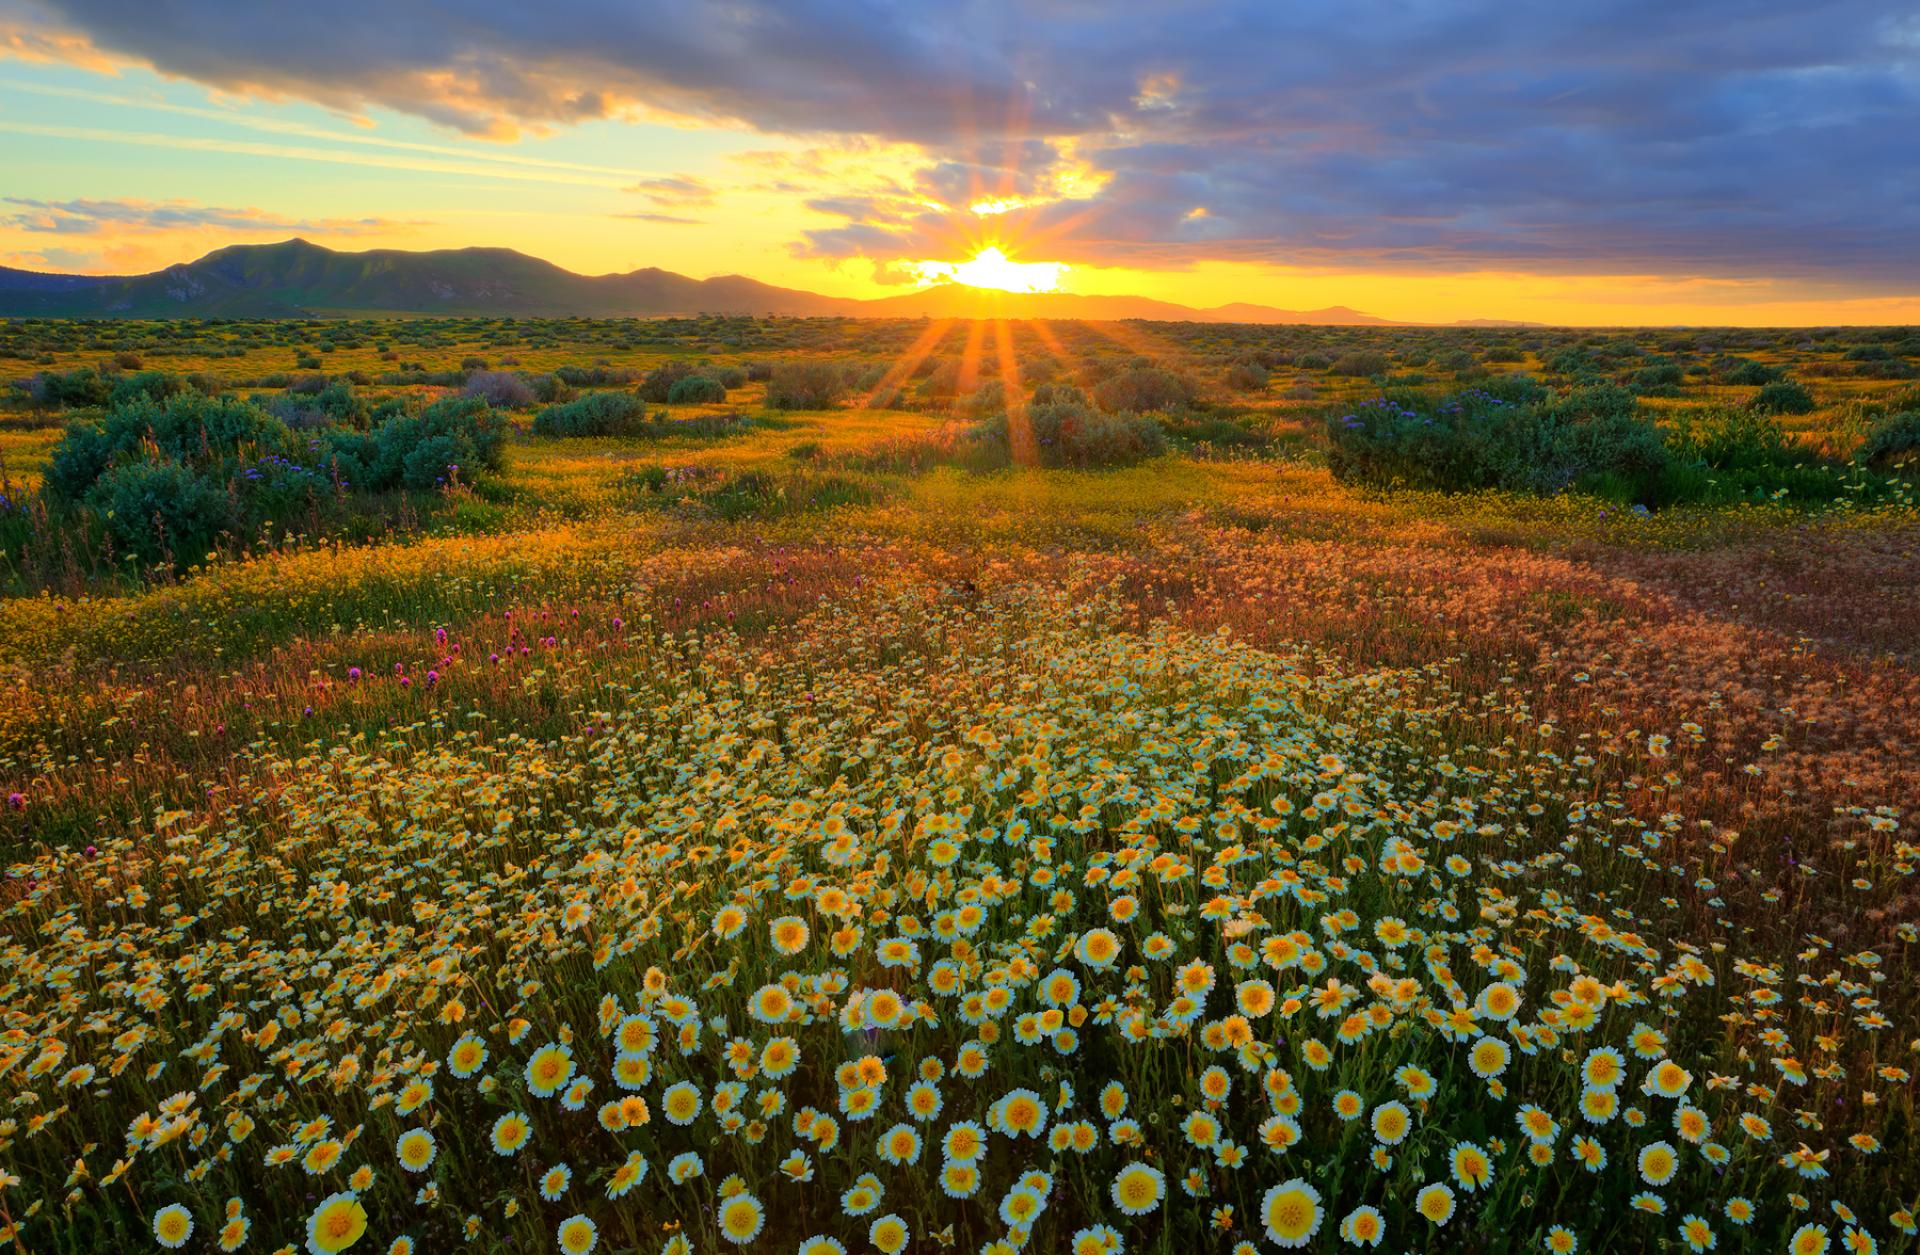 Wildflowers in Carrizo Plain National Monument, California.